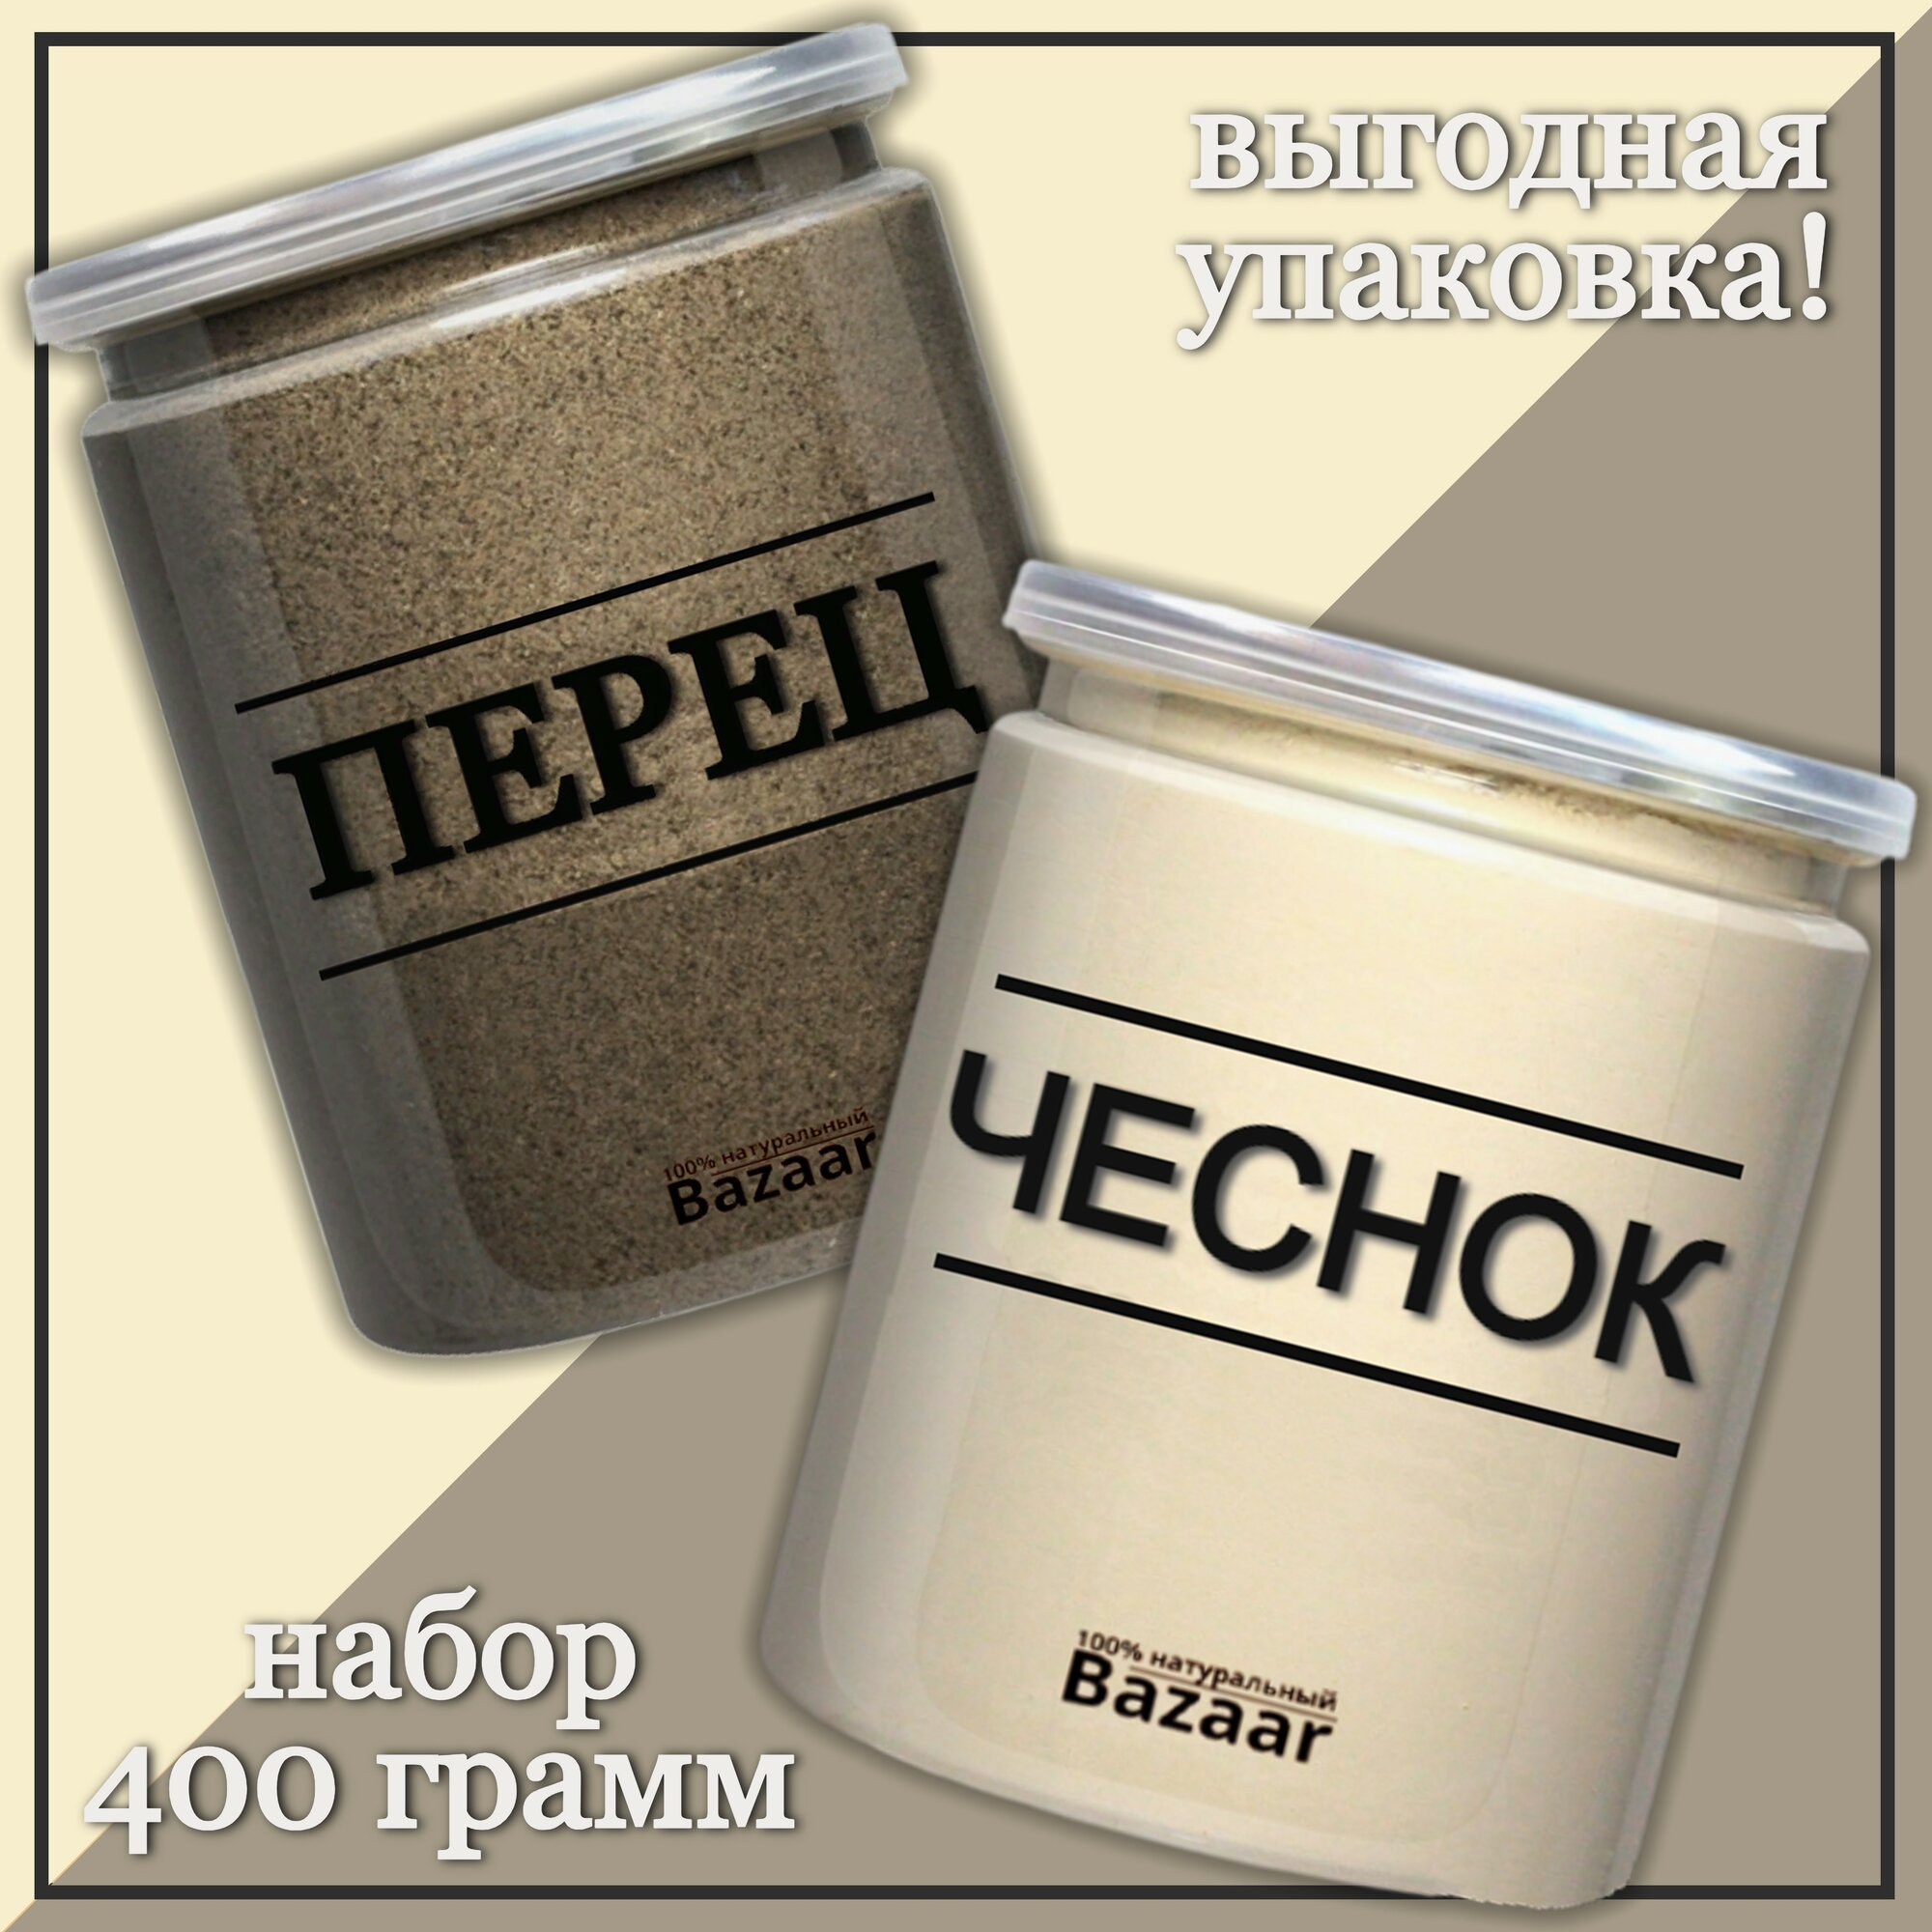 Перец черный молотый 200 грамм / Чеснок сушеный молотый 200 грамм / Набор